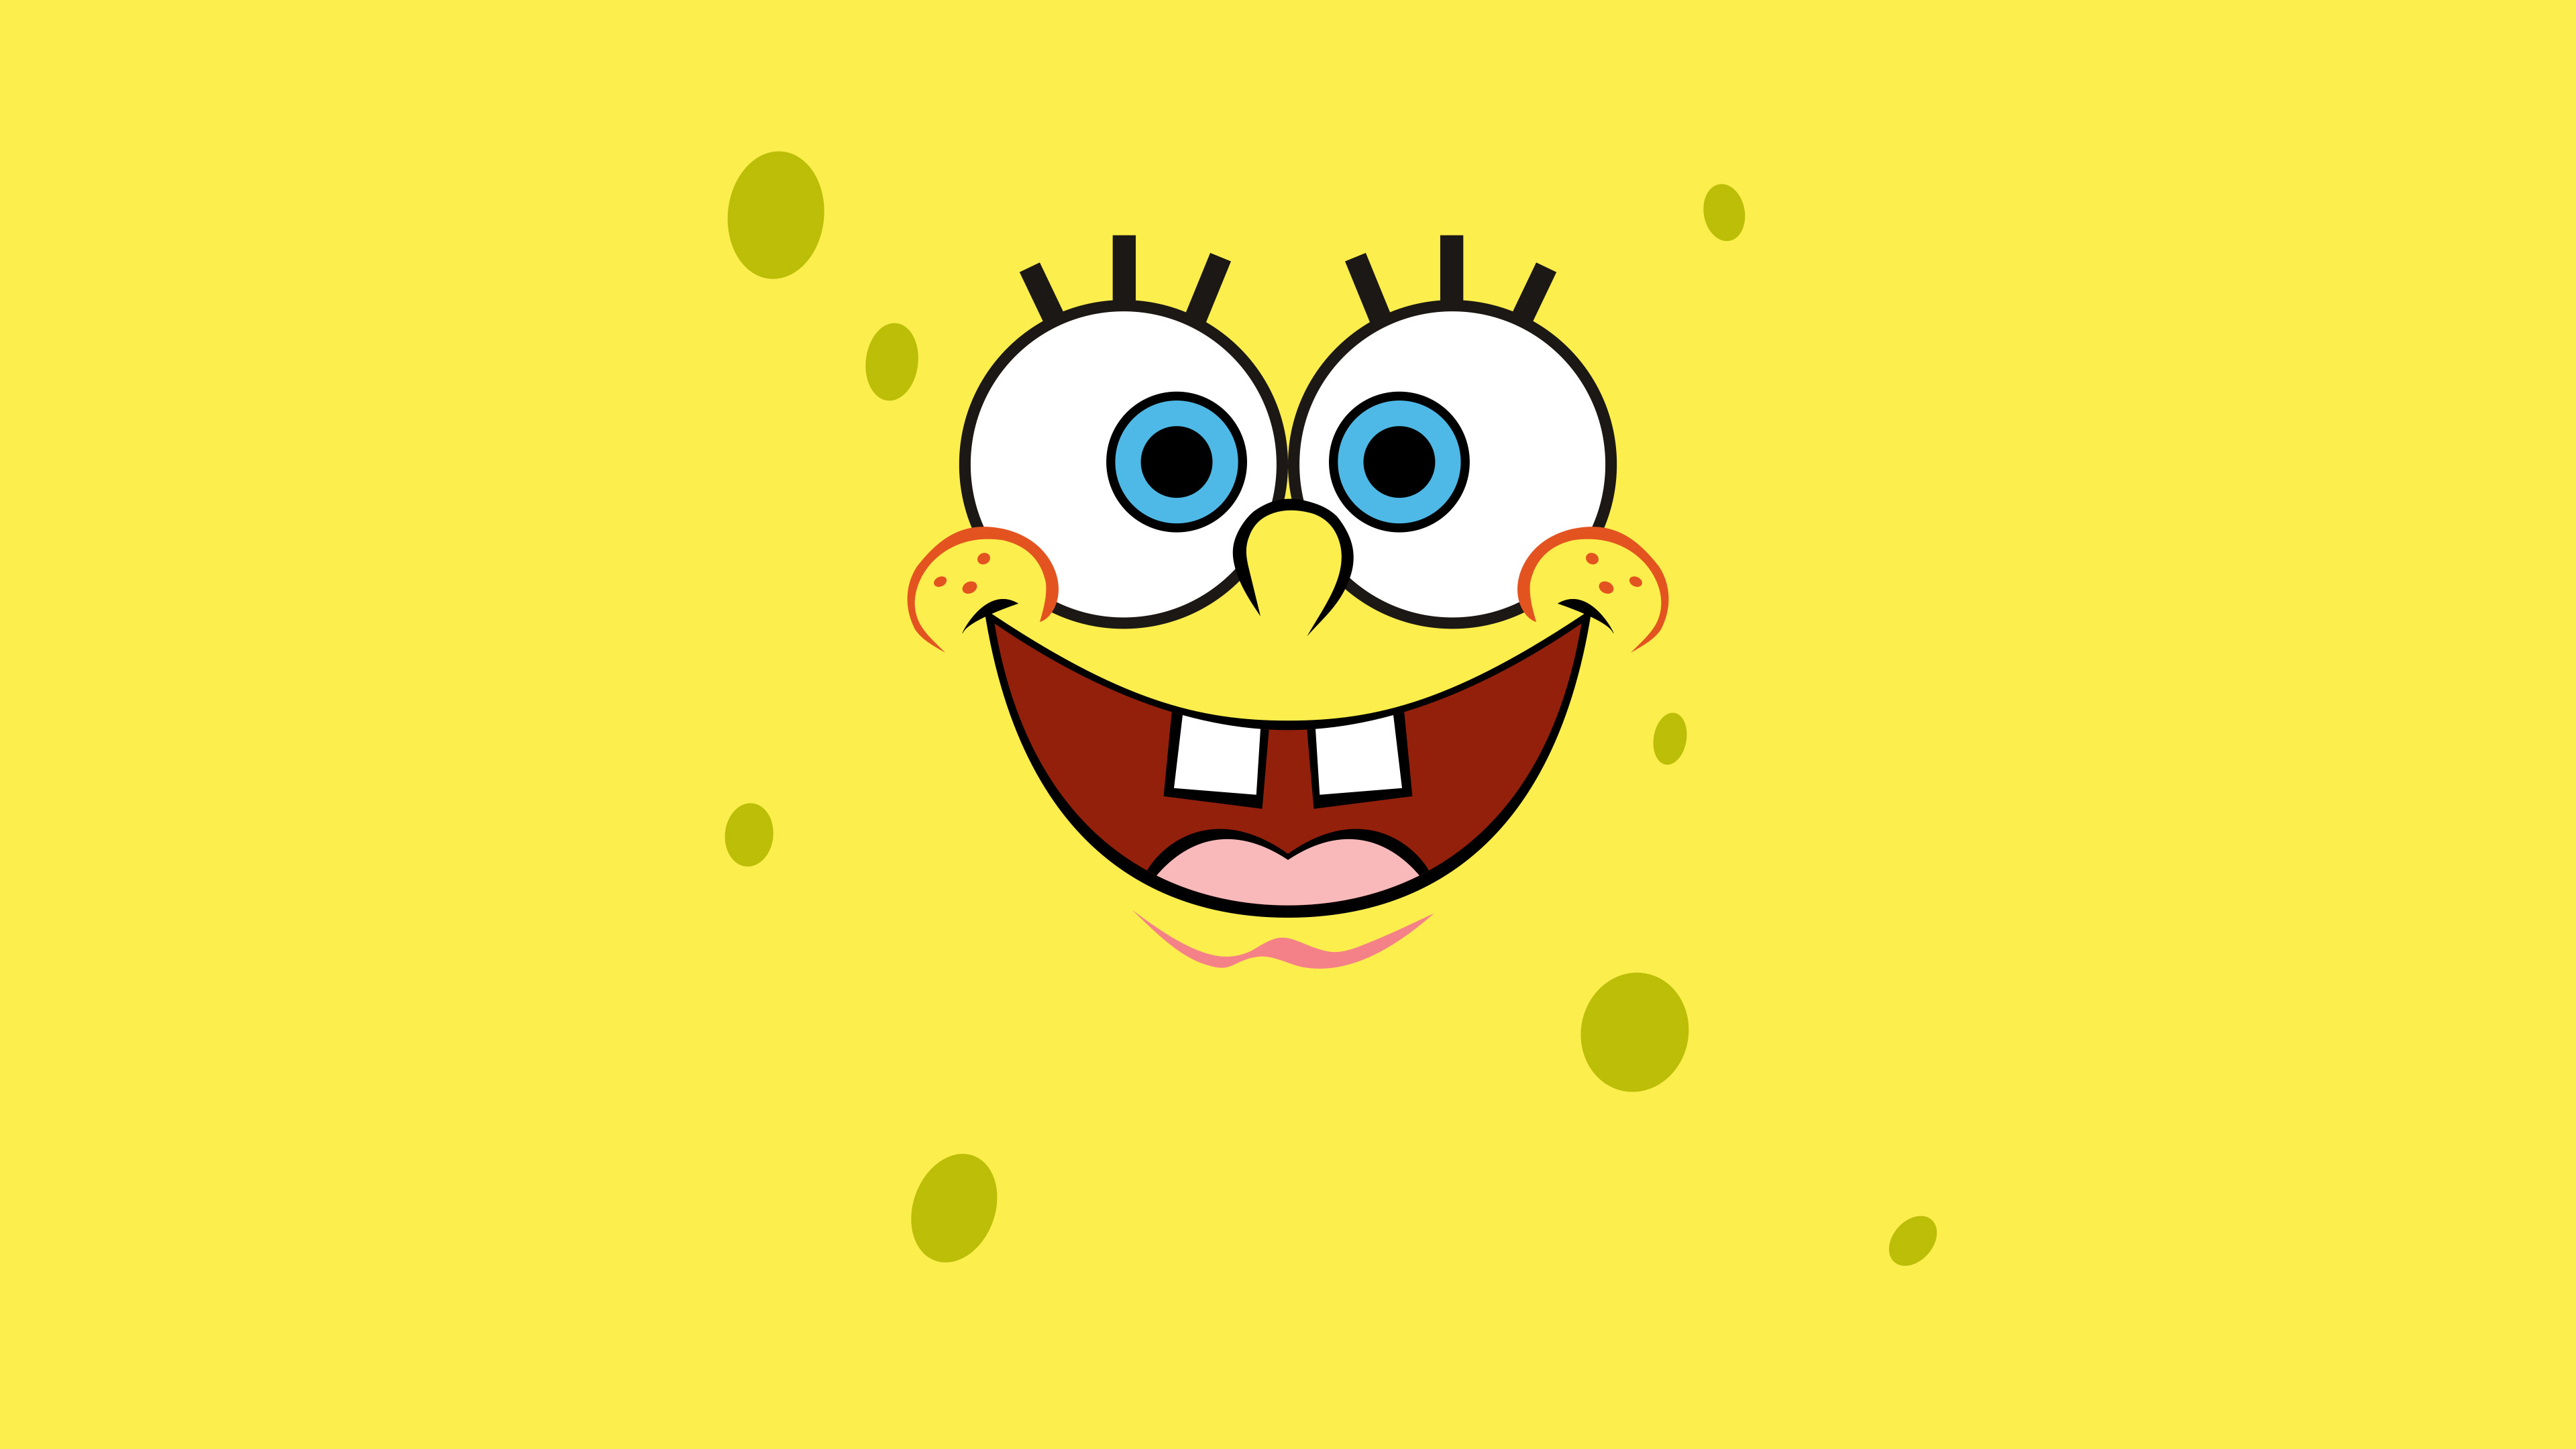 Spongebob Squarepants Minimalist 4k Hd Cartoons 4k Wallpapers Images